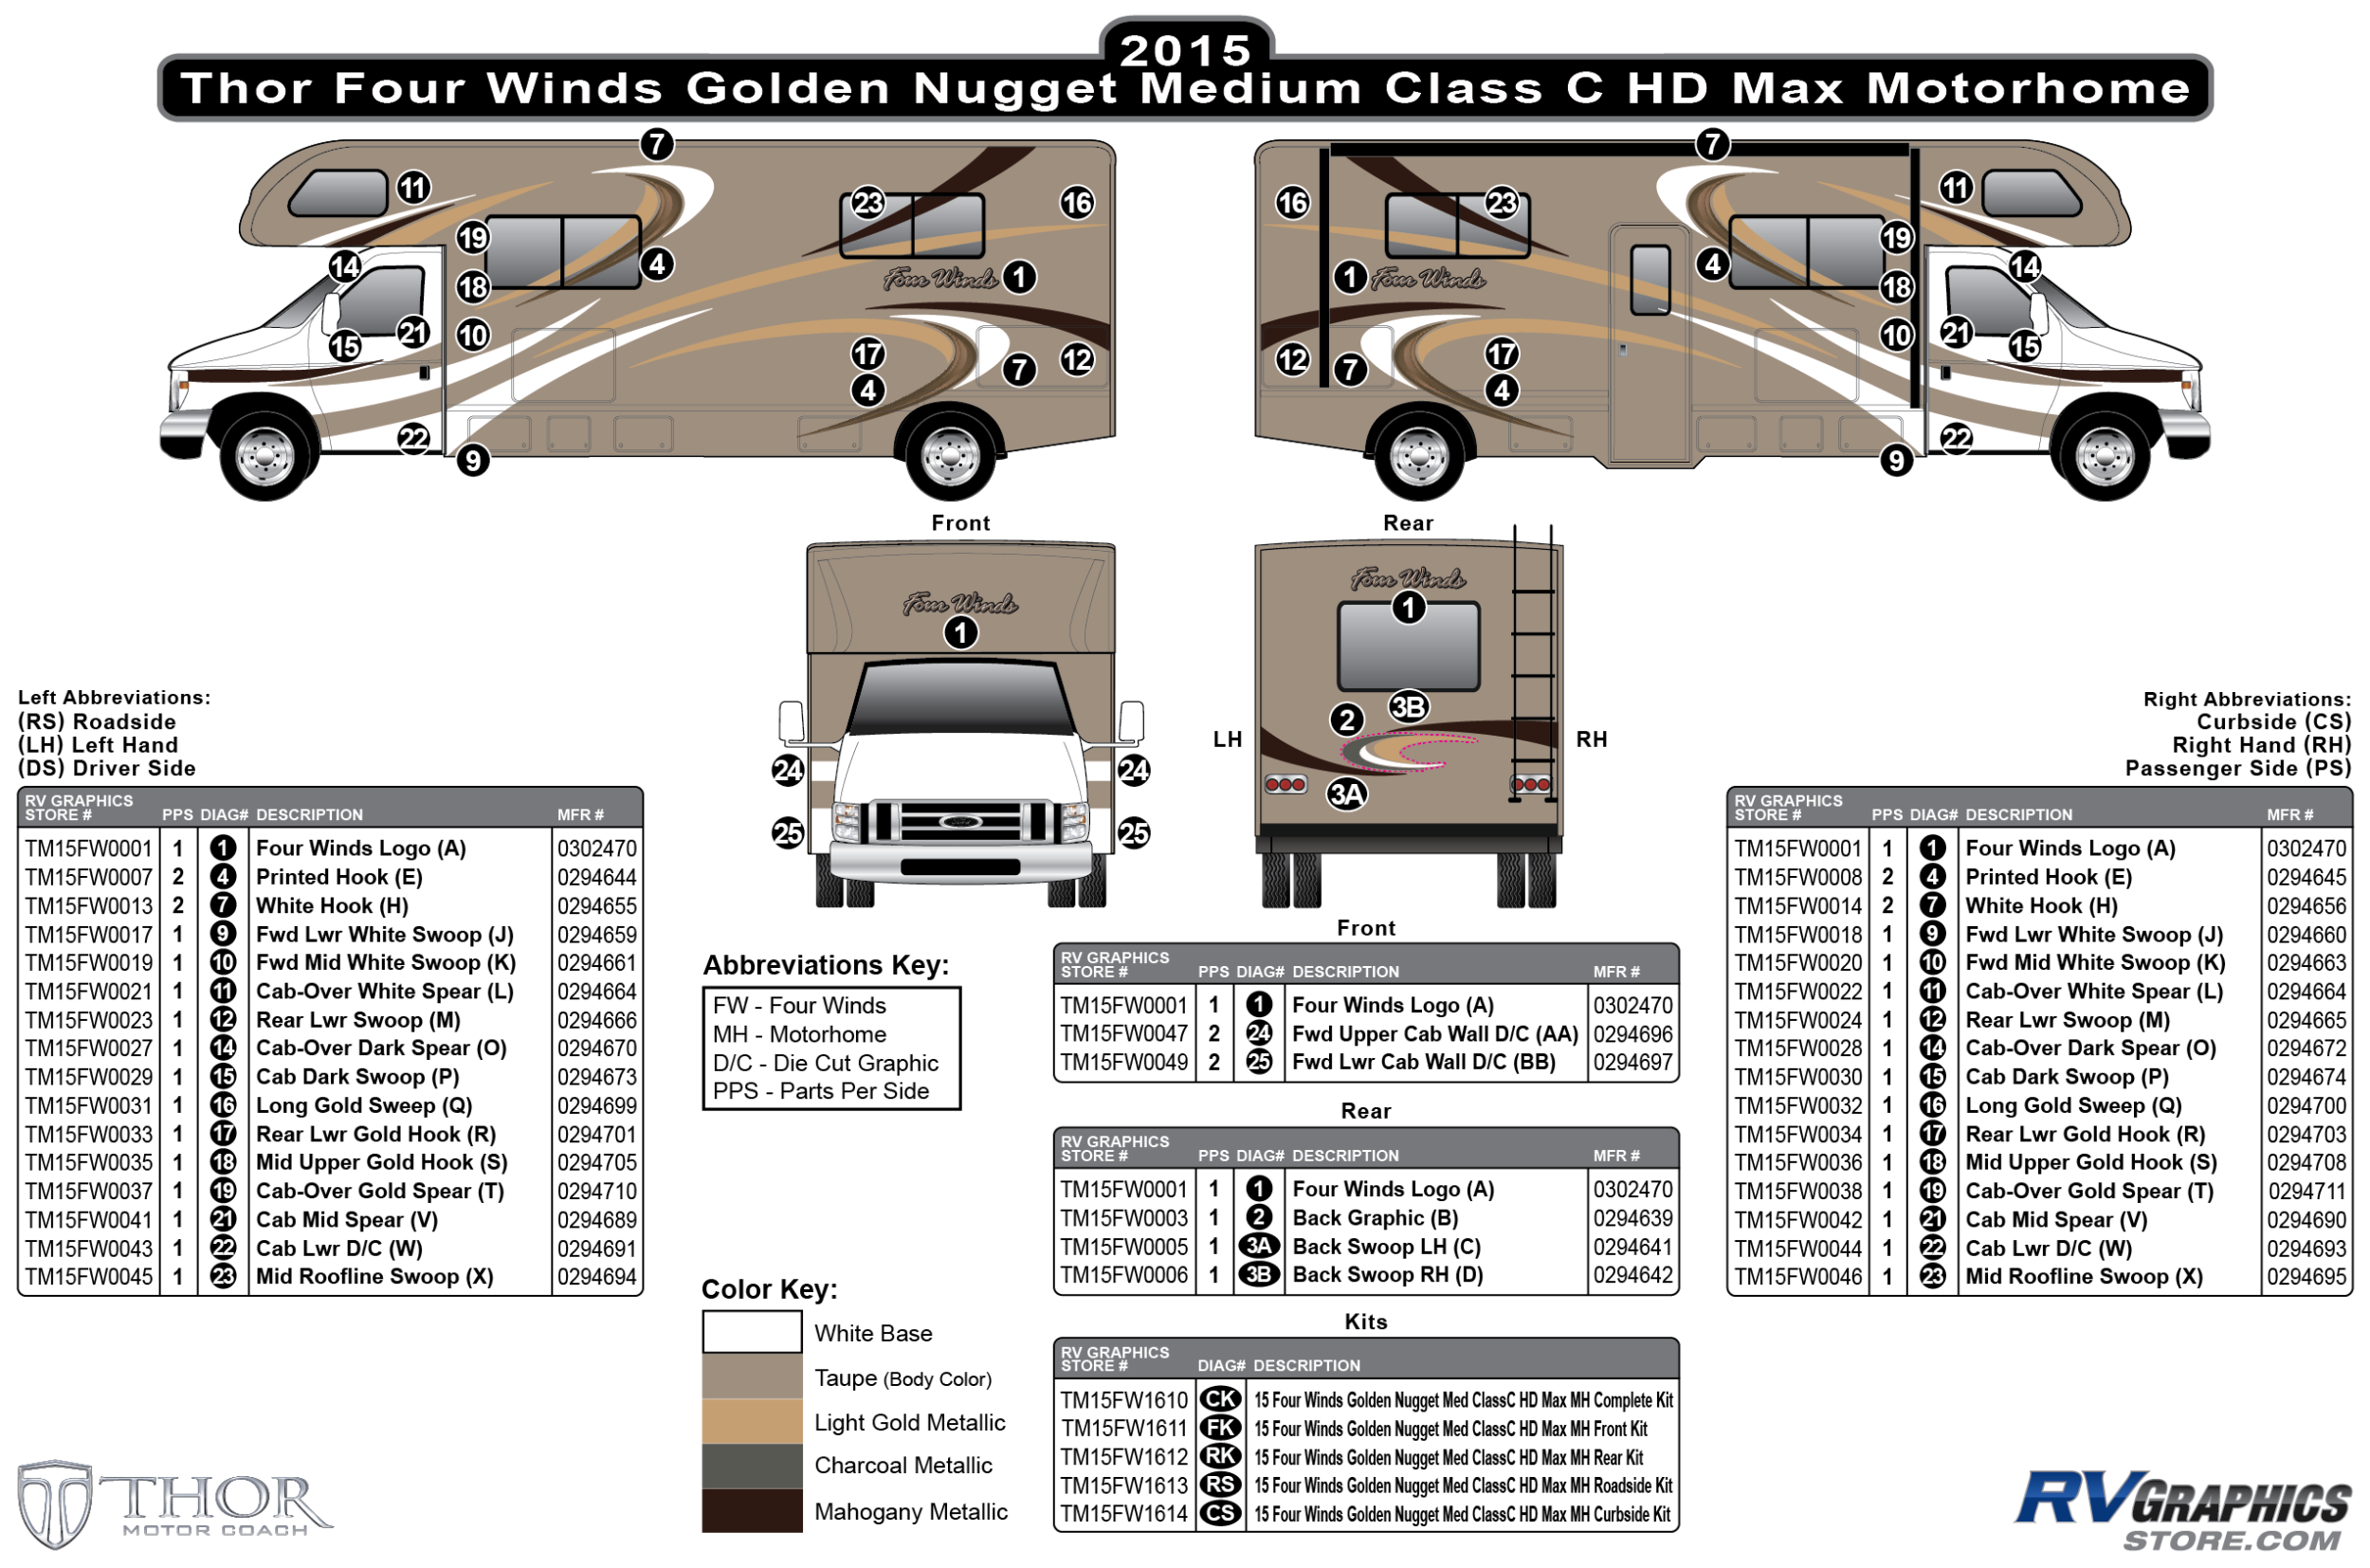 Four Winds - 2015 Four Winds MH-Motorhome Medium Golden Nugget